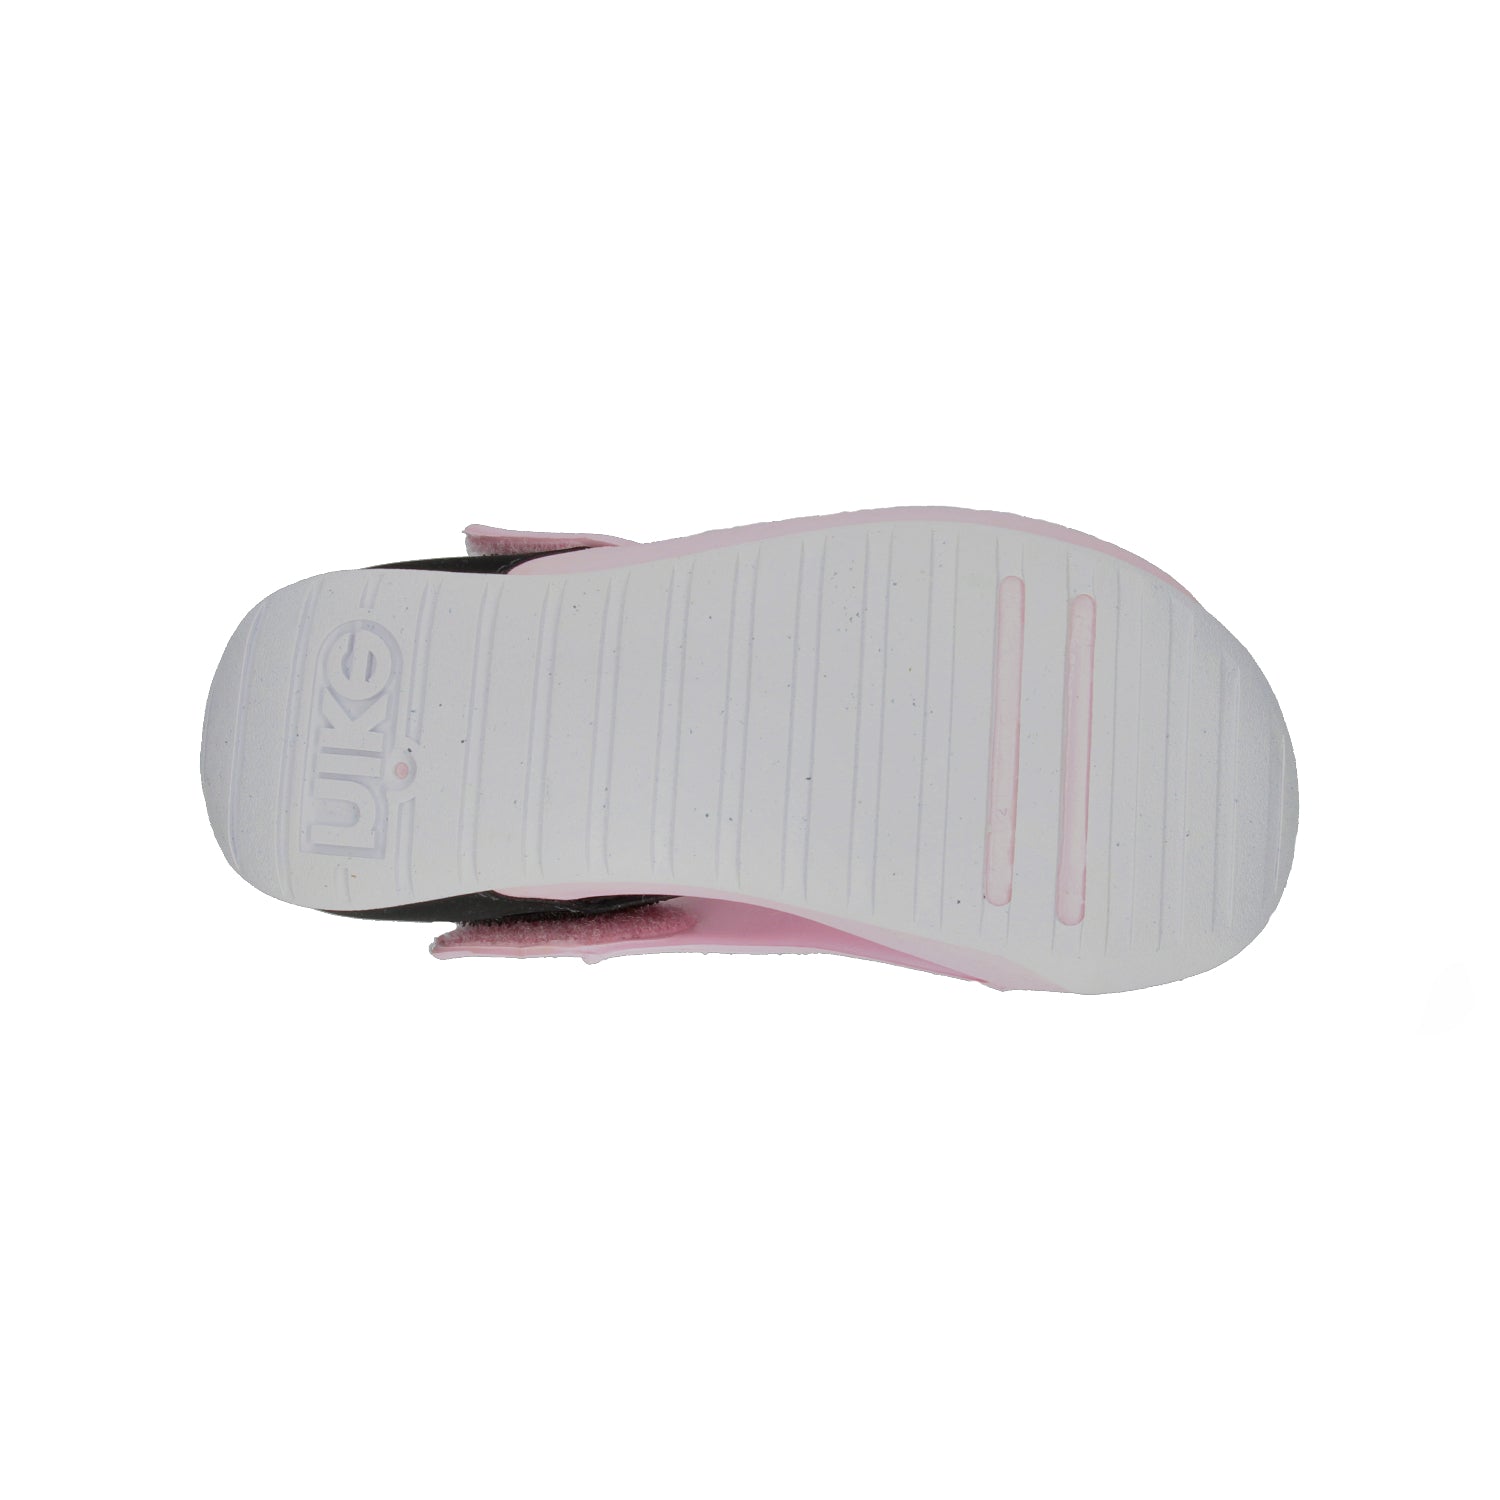 Sandalias Nike para Niña DH9462-601 Rosa [NIK2693] - Zapaterias Torreon